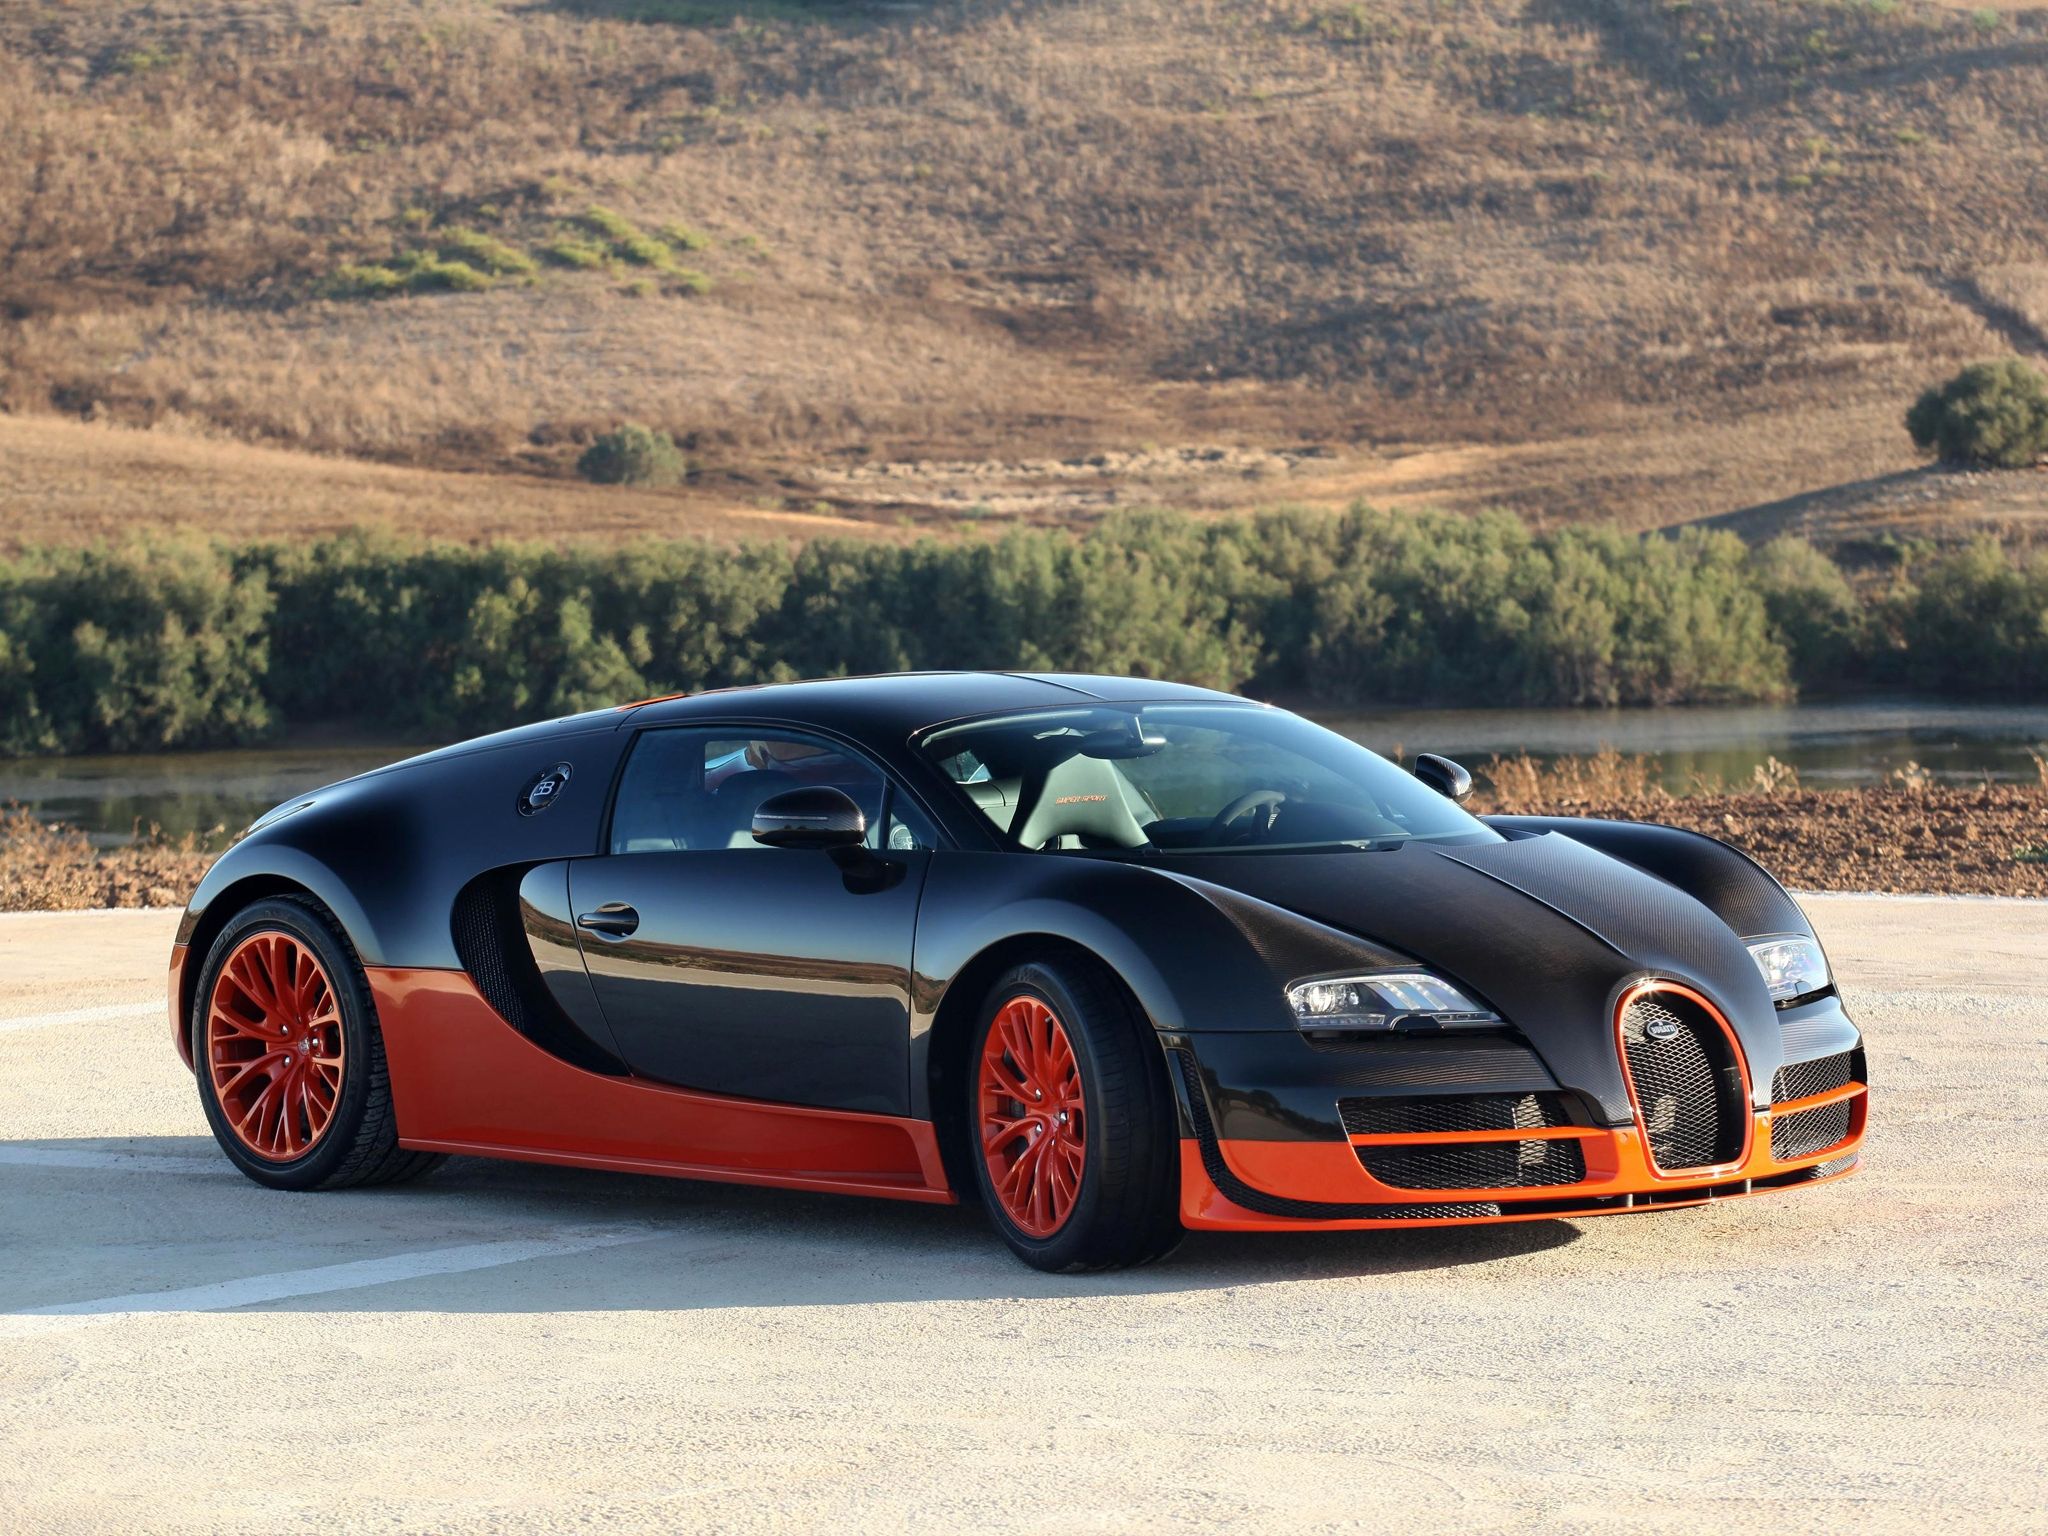 Bugatti Veyron HD Widescreen Supercar Wallpapers | HD Wallpapers ...